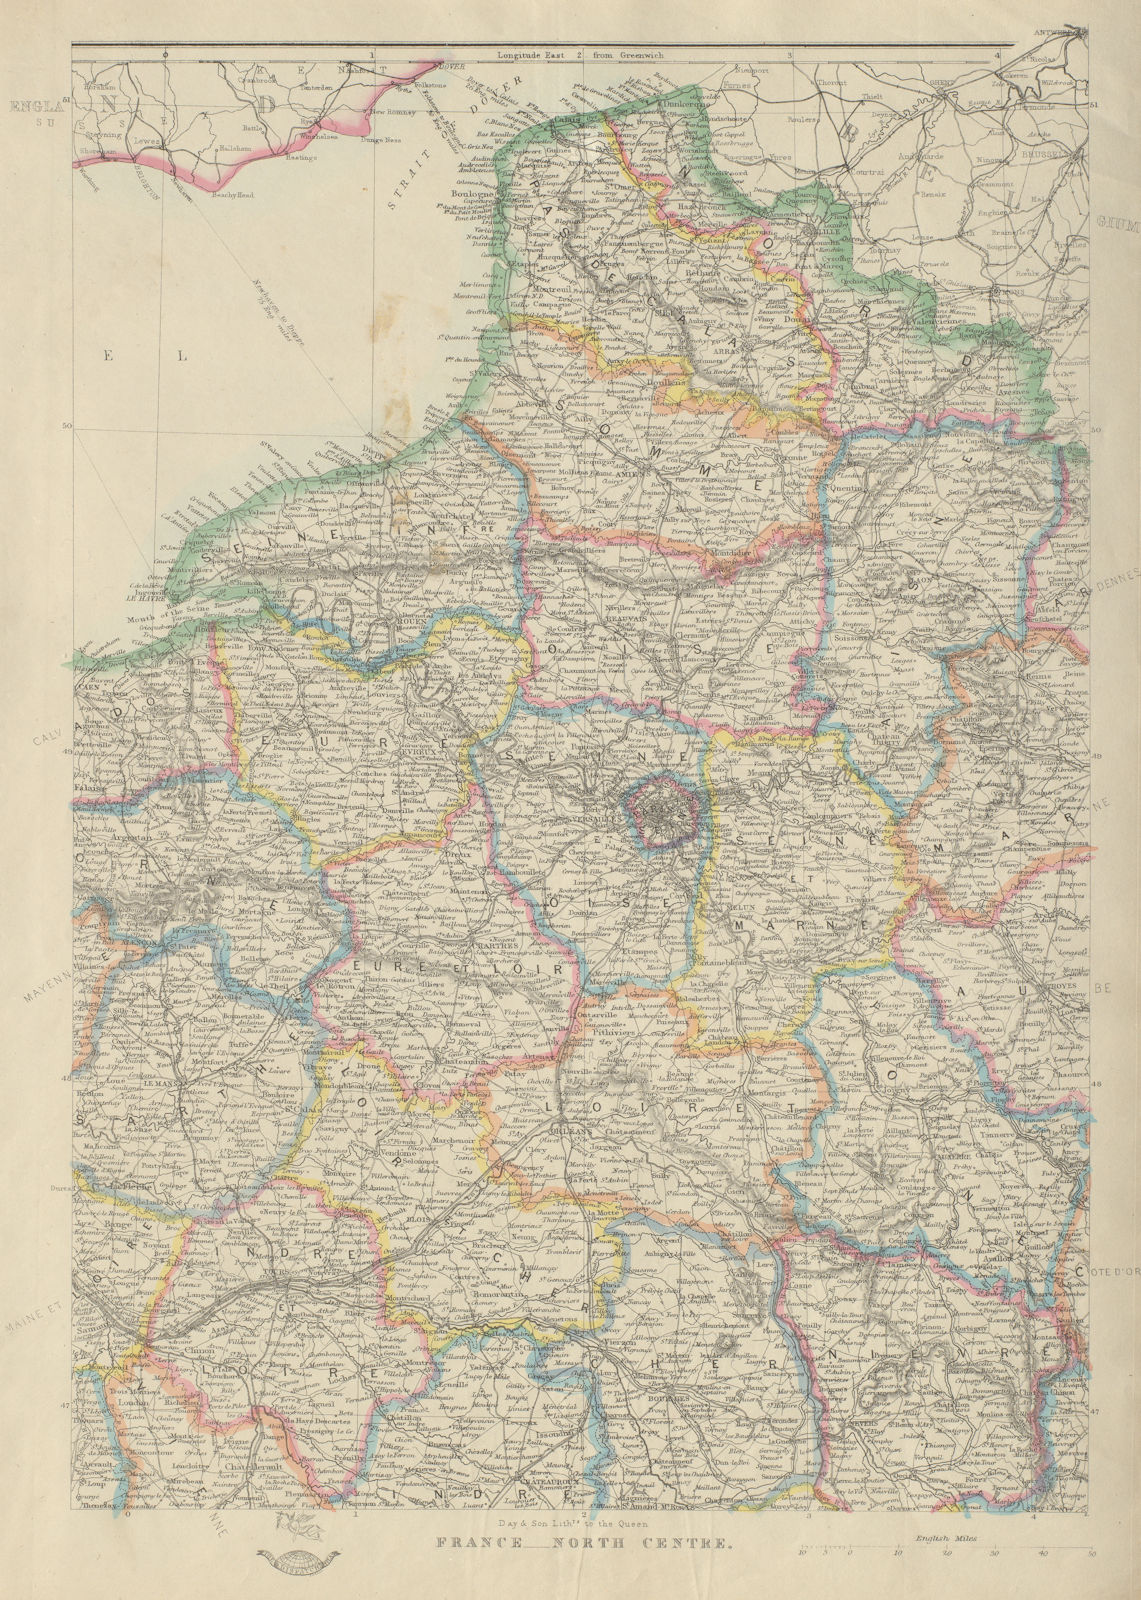 FRANCE NORTH CENTRE. Picardy Normandy Ile de France Bourgogne.JW LOWRY 1862 map